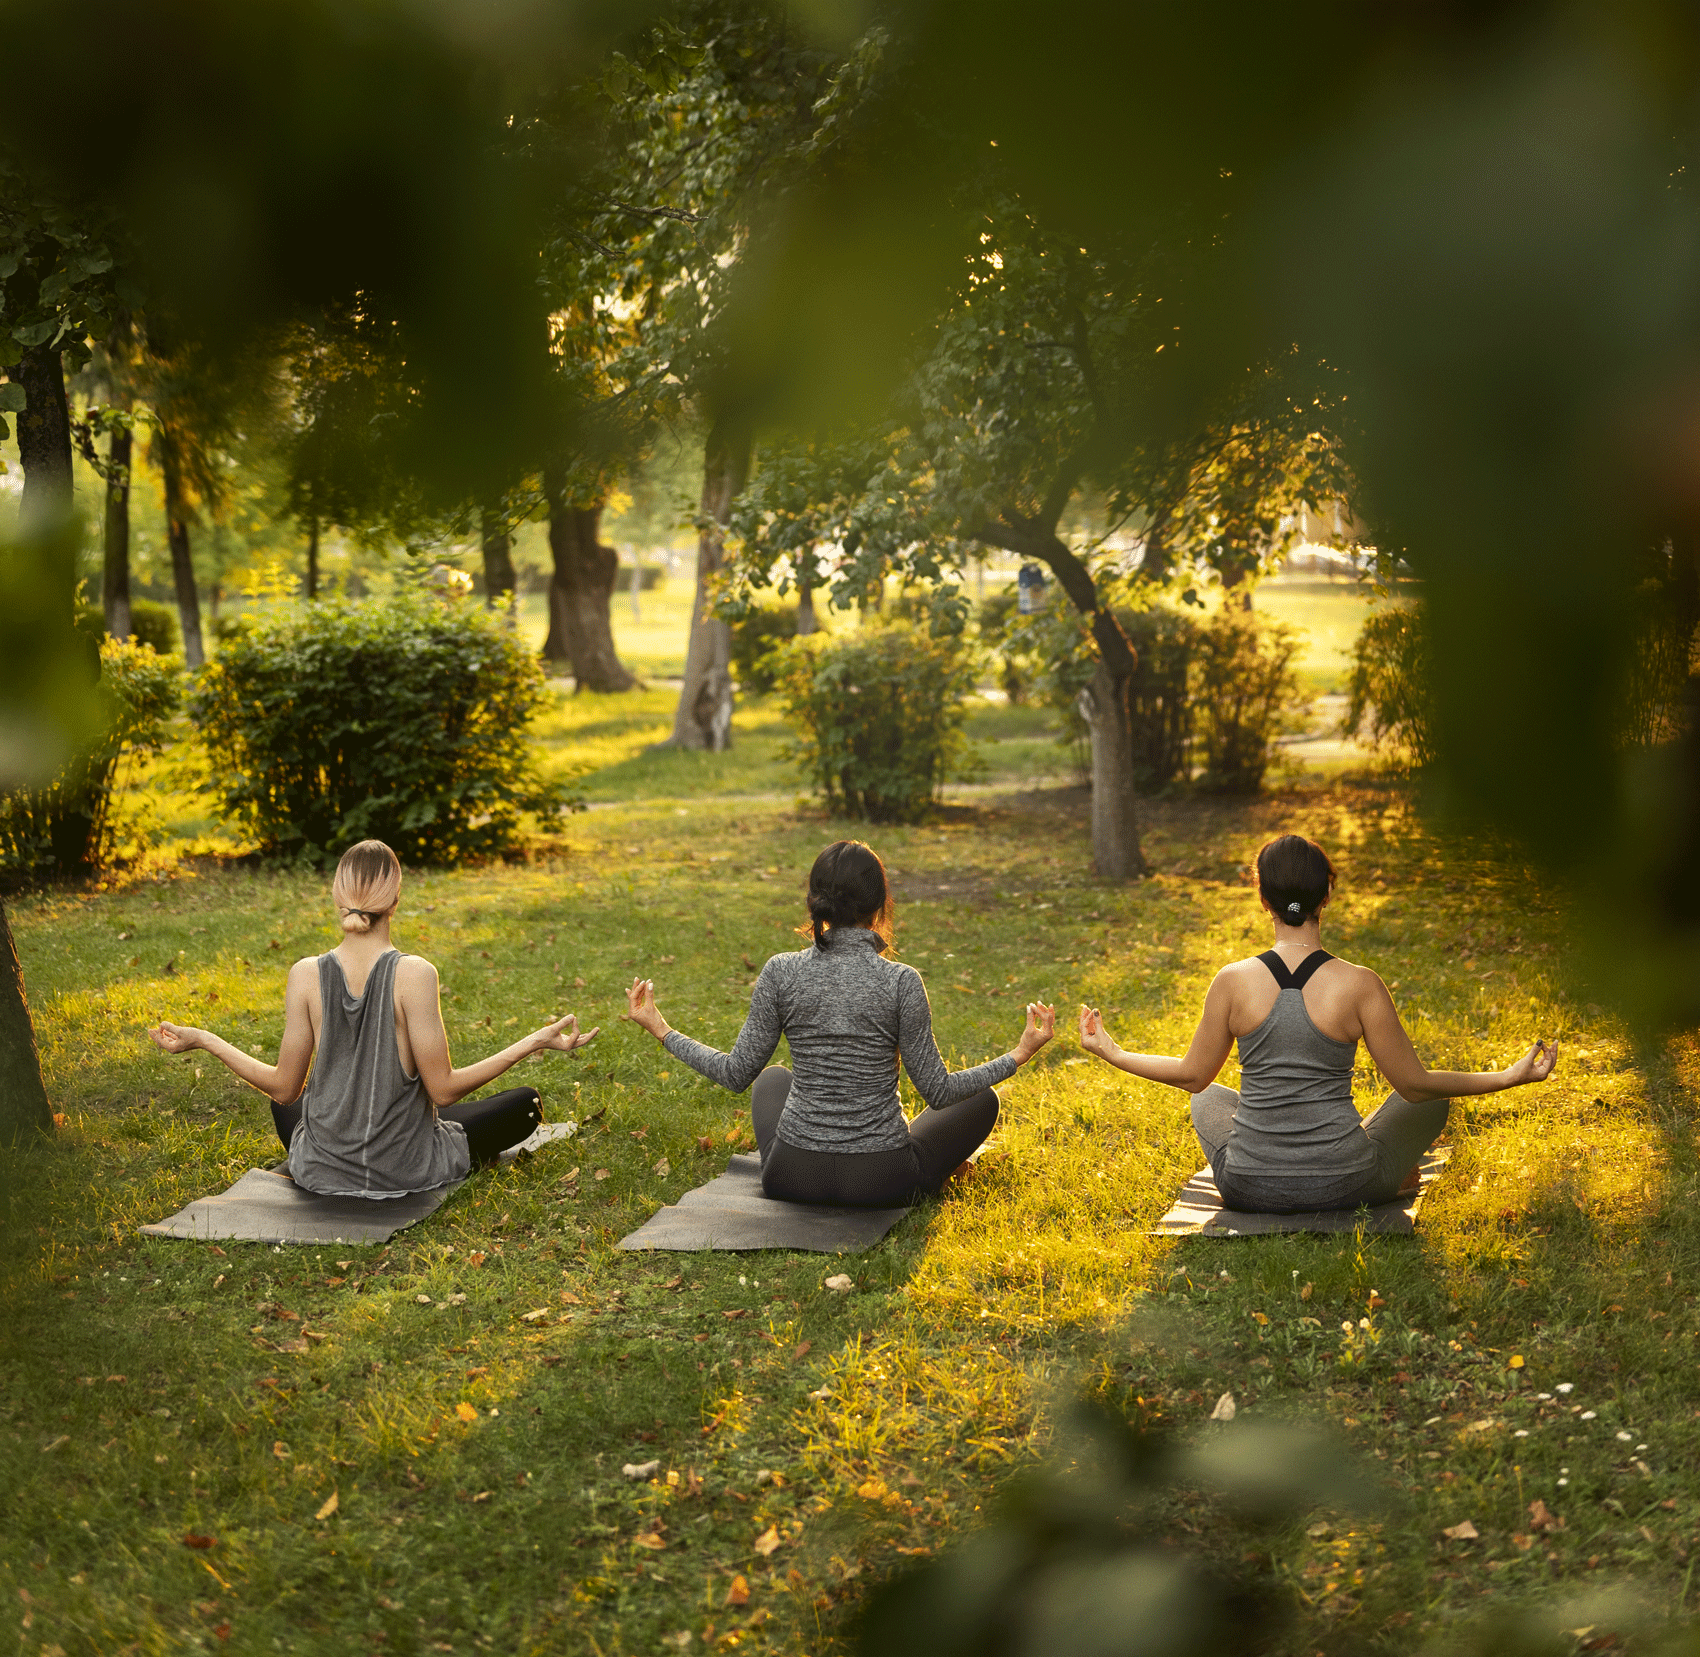 full-shot-women-meditating-outdoors